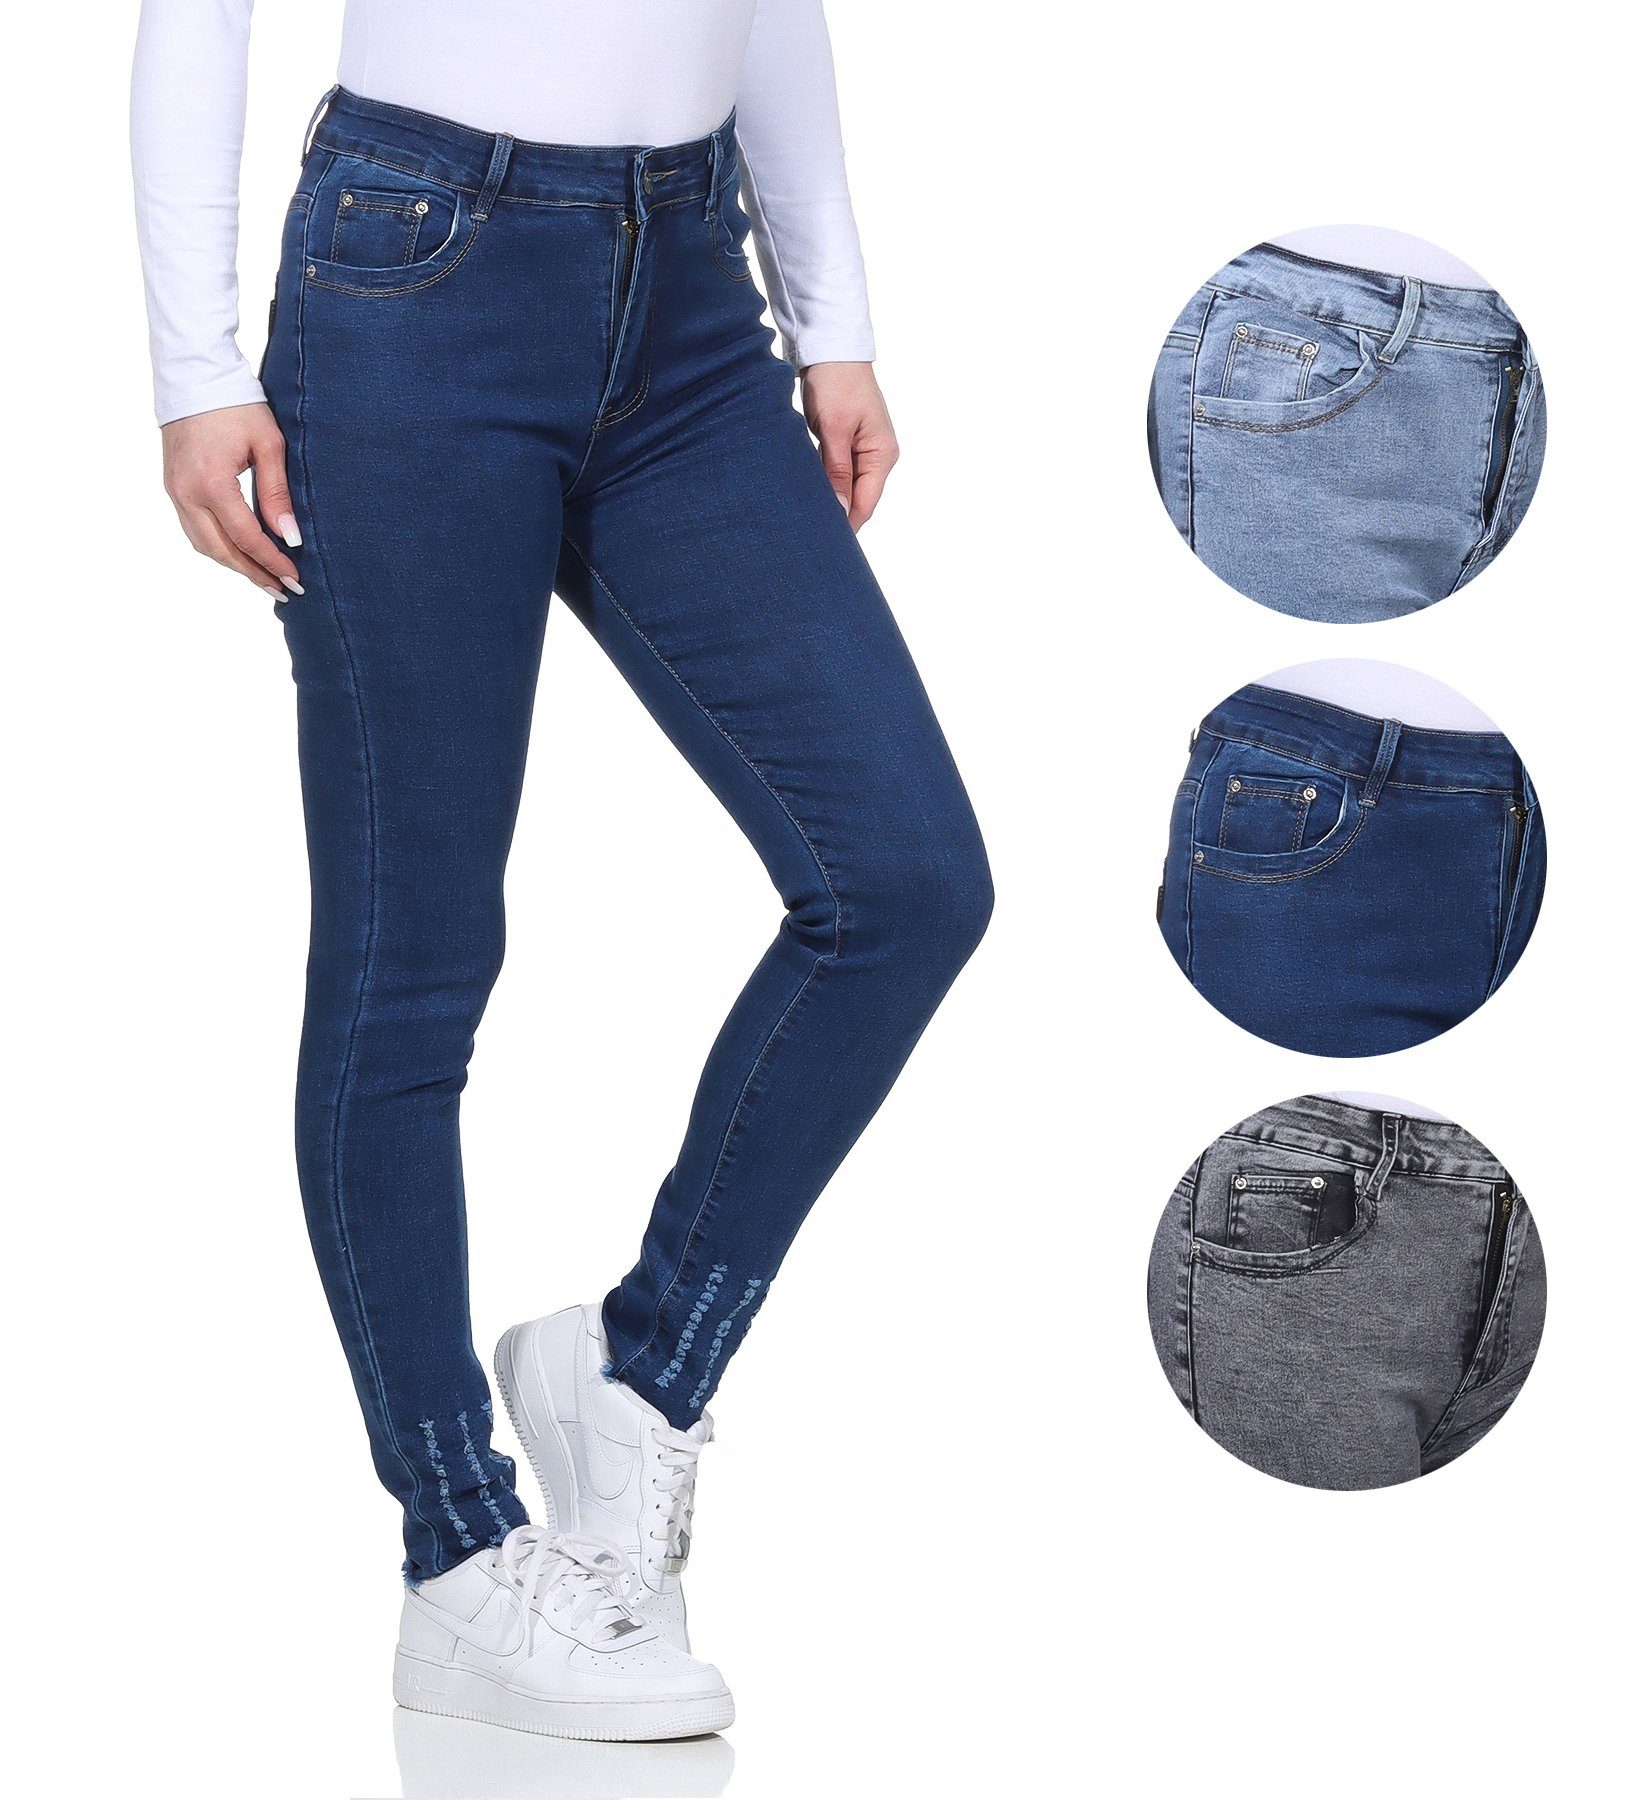 moderner Dunkelblau Distressed Look für Damen Look Stretch Jeanshosen Aurela 5-Pocket-Jeans Jeans Destroyed Damenmode